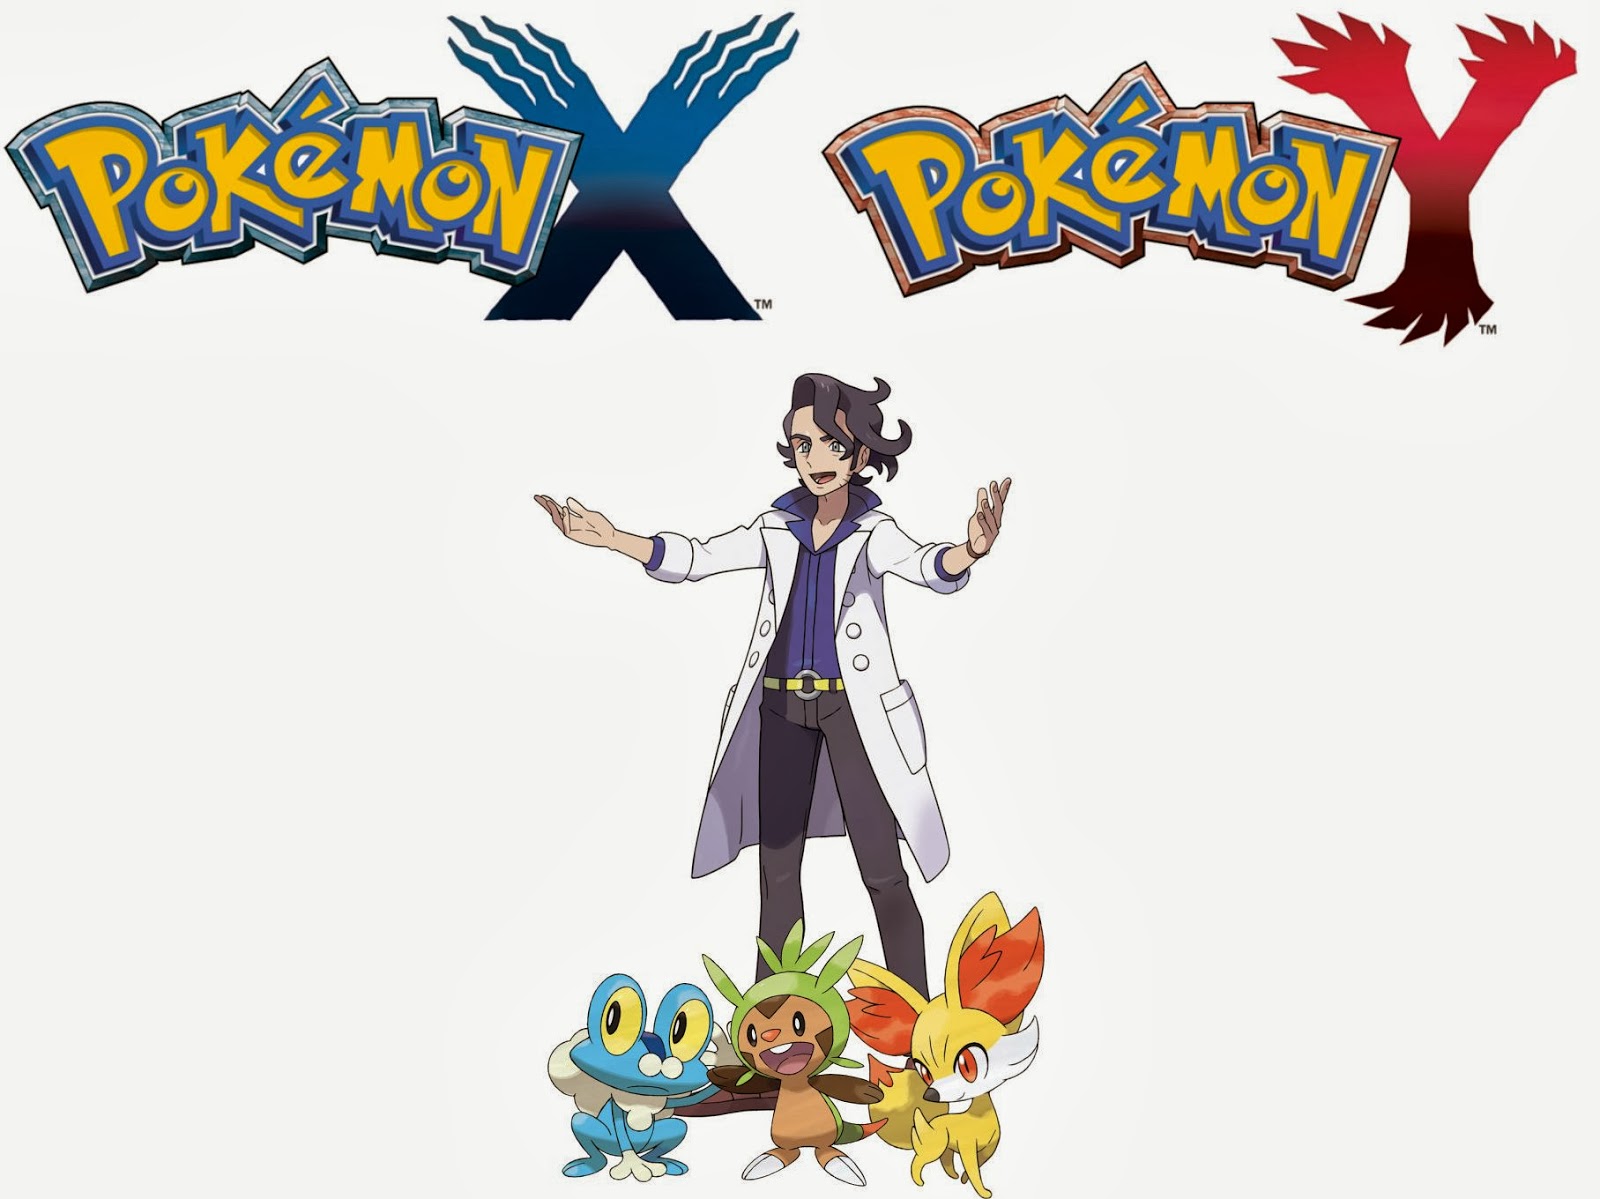 Rumores sobre o Anime Pokémon XY